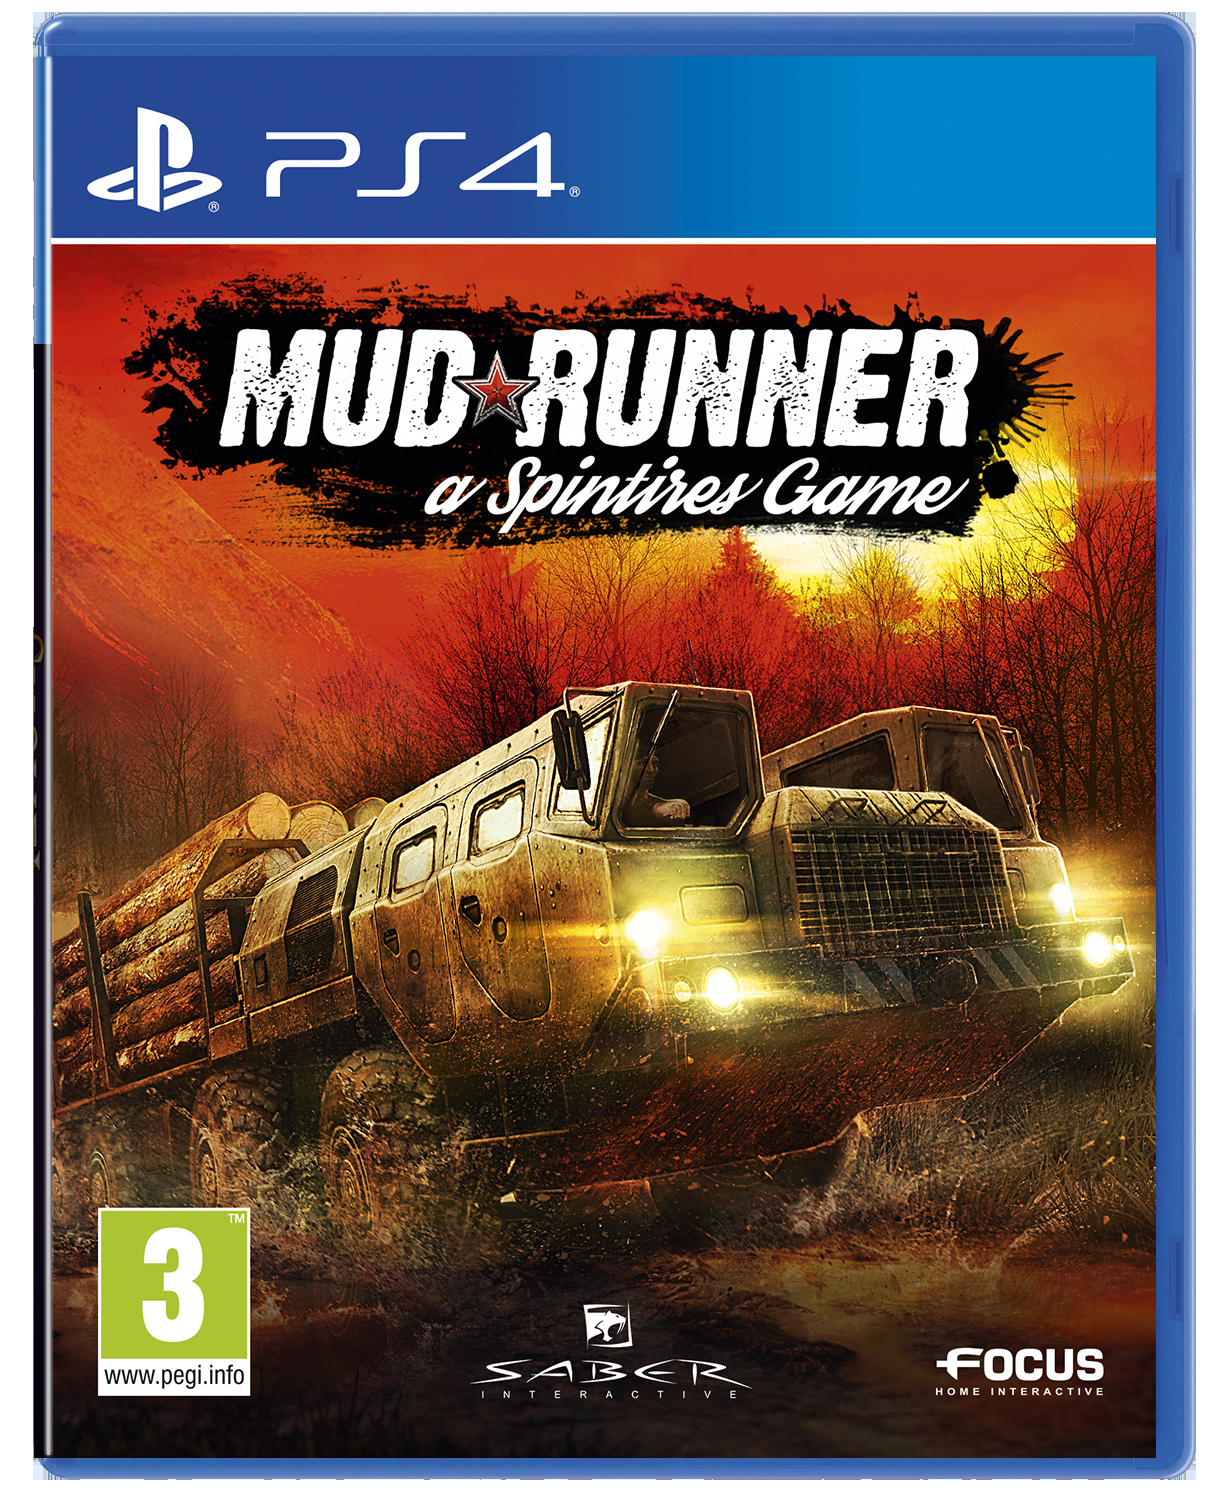 Spintires: MudRunner [PS4, русская версия]